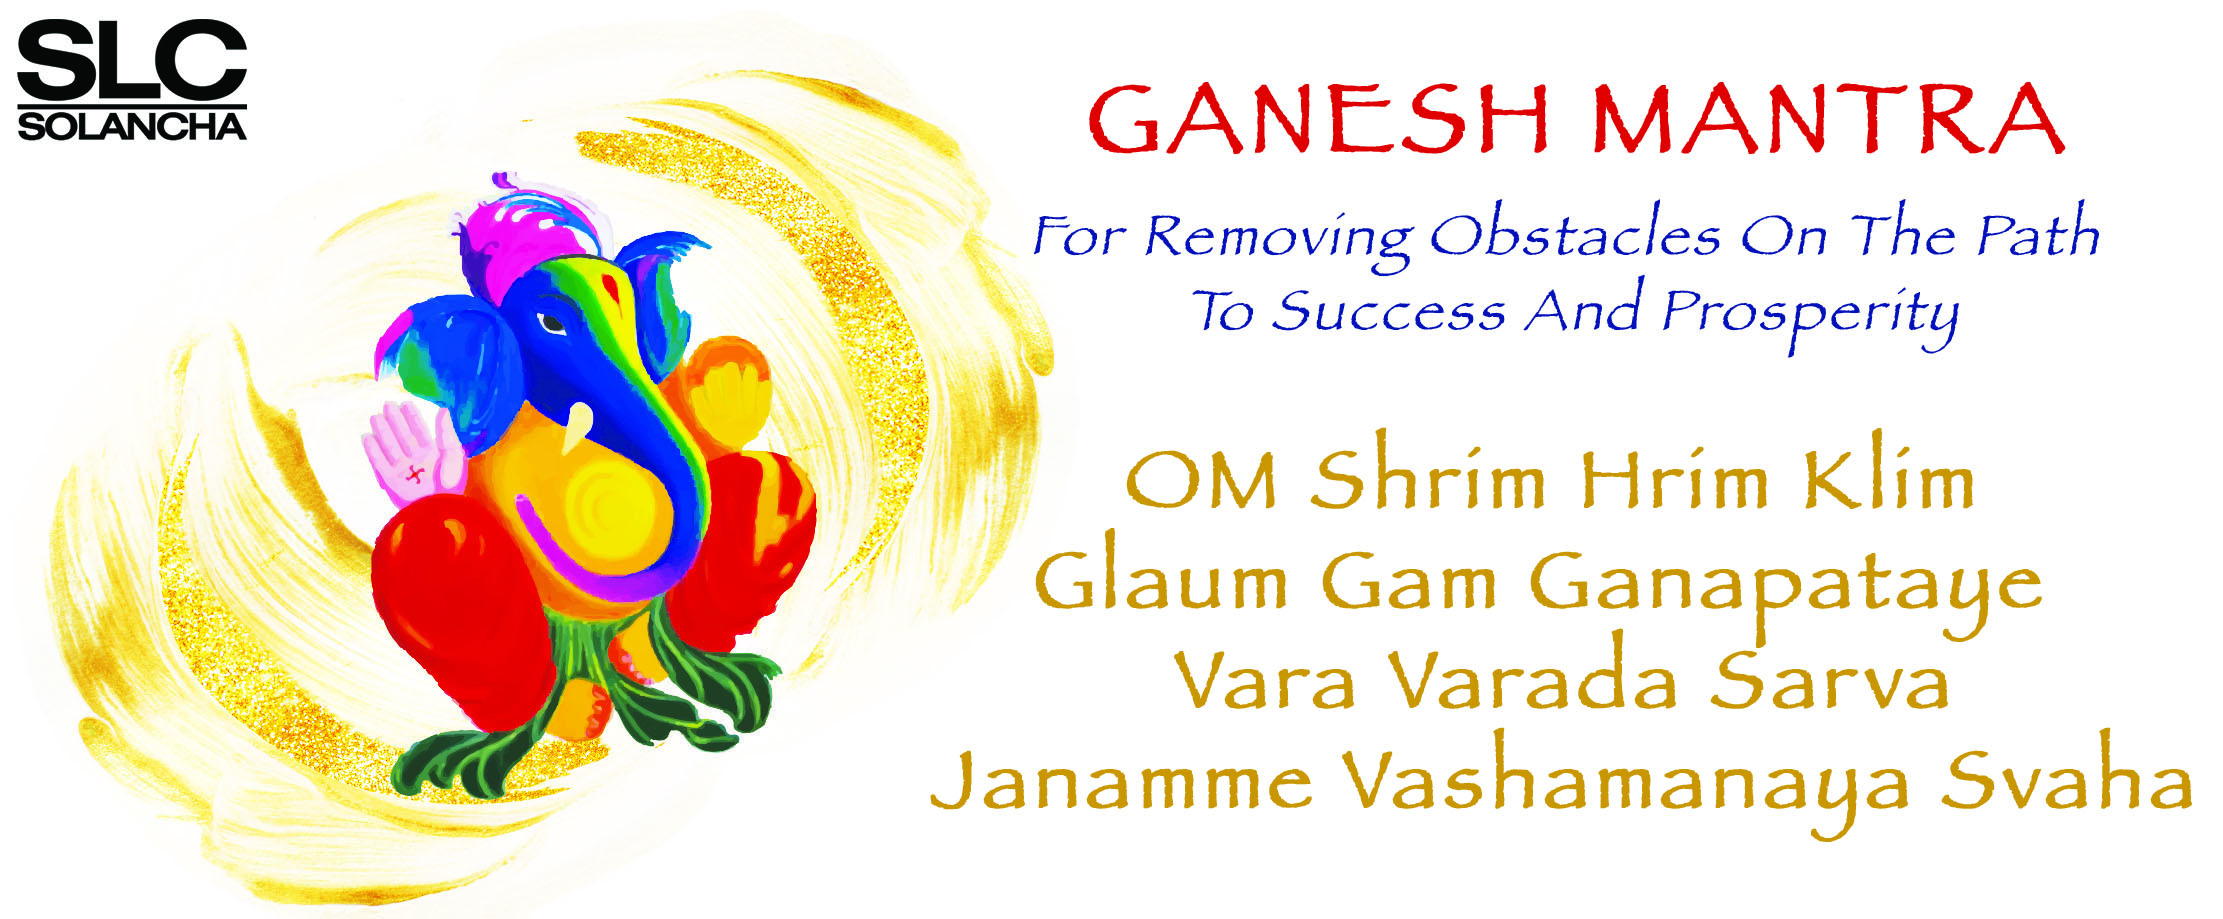 ganesh mantra prosperity image